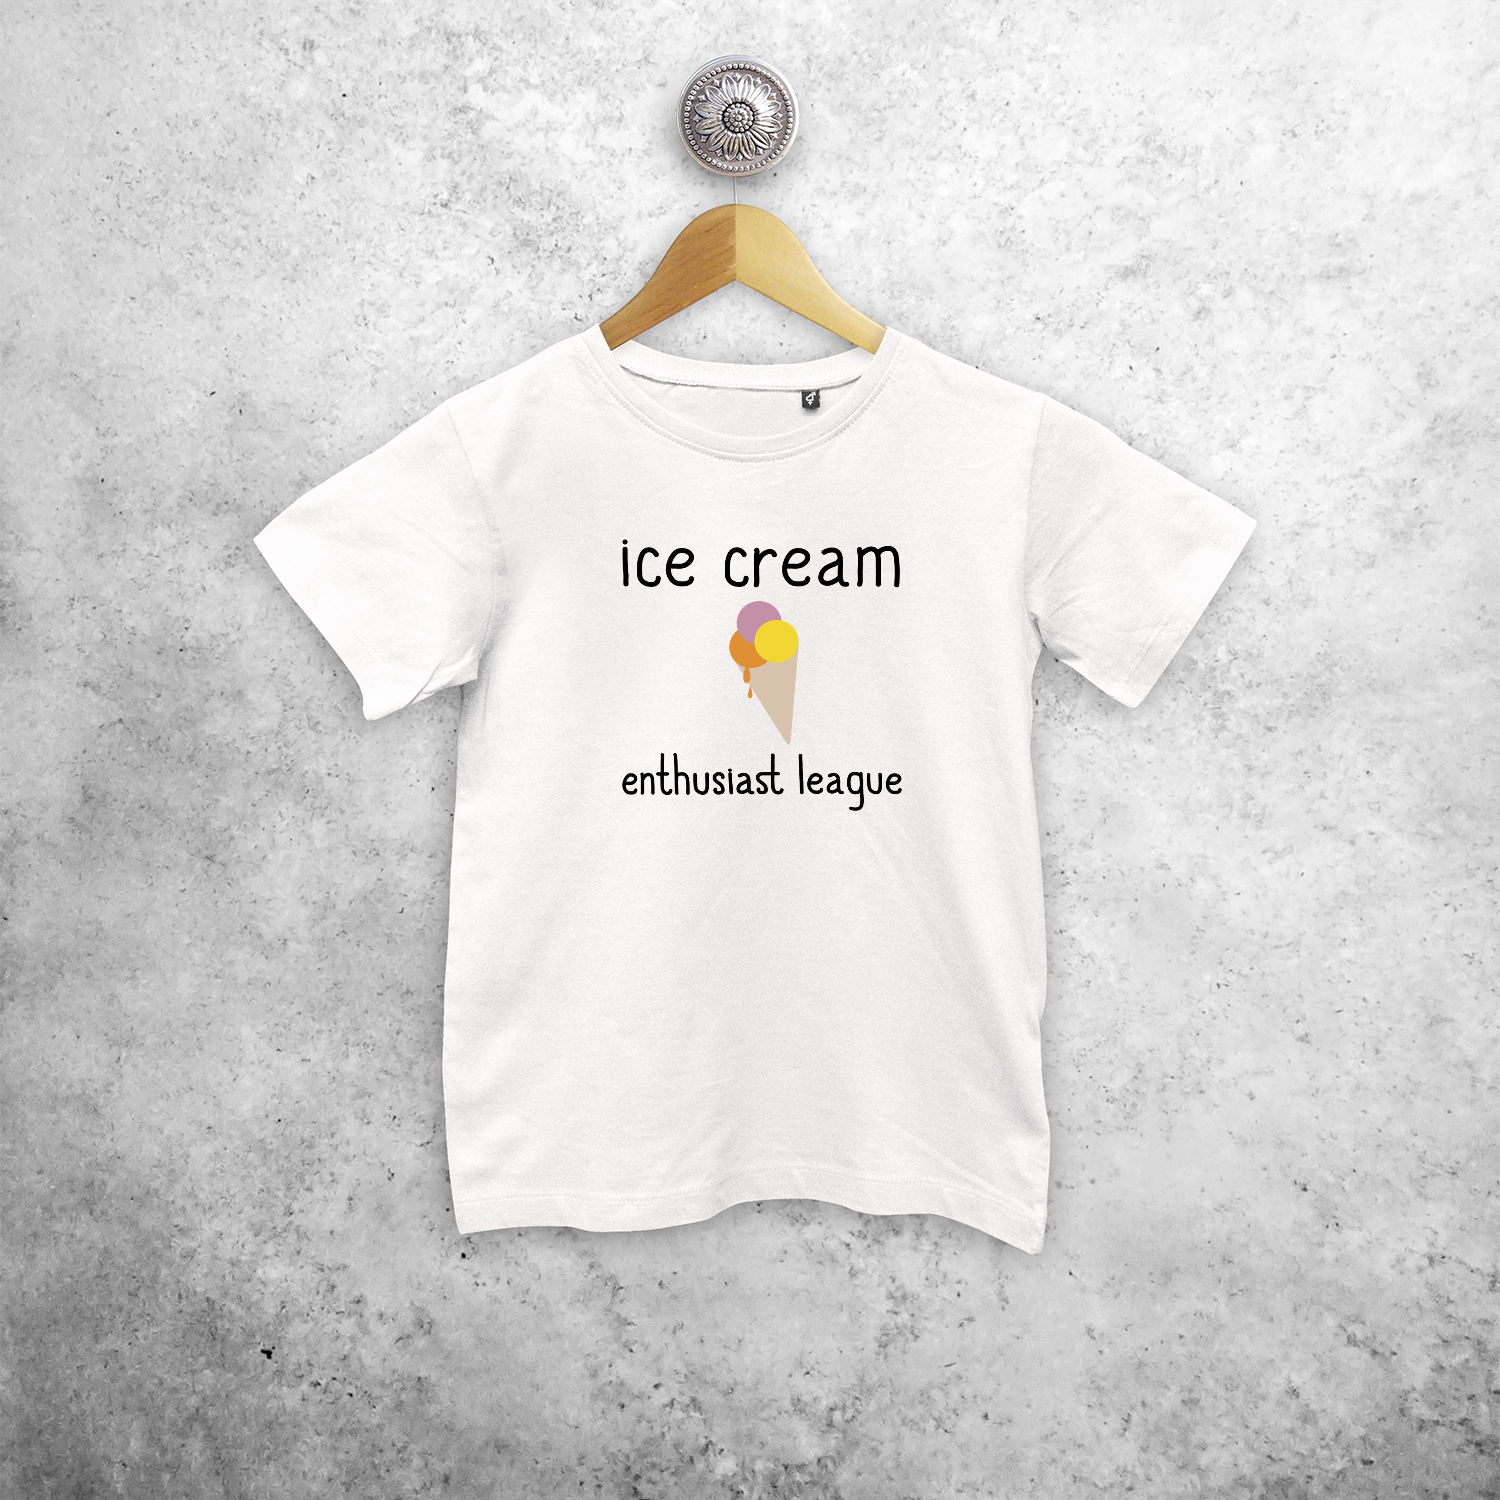 'Ice cream enthusiast league' kids shortsleeve shirt